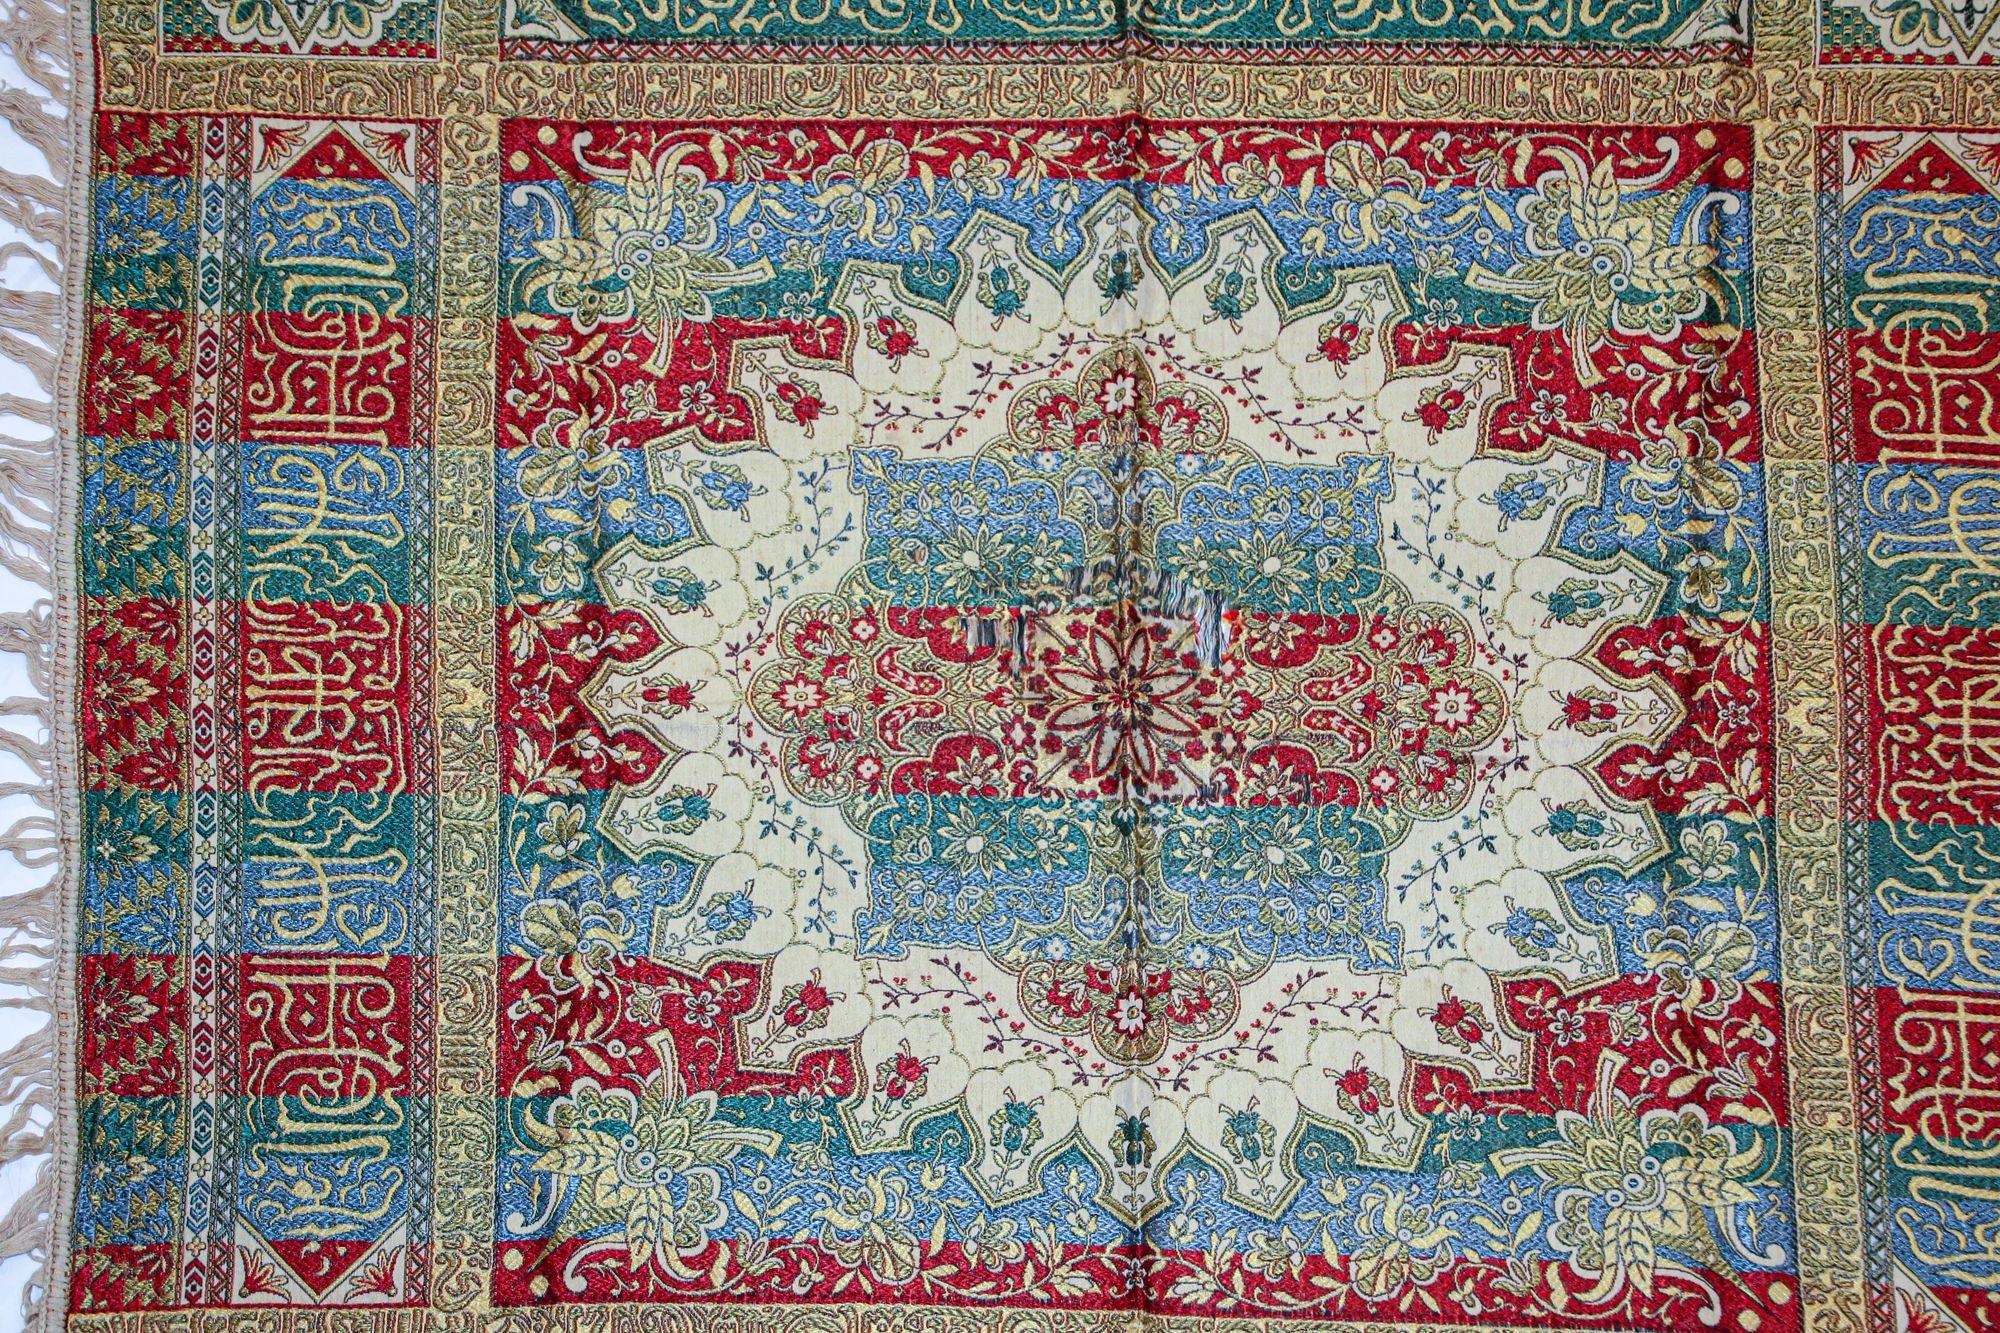 1920s Antique Granada Spain Moorish Islamic Tapestry with Arabic Writing 3